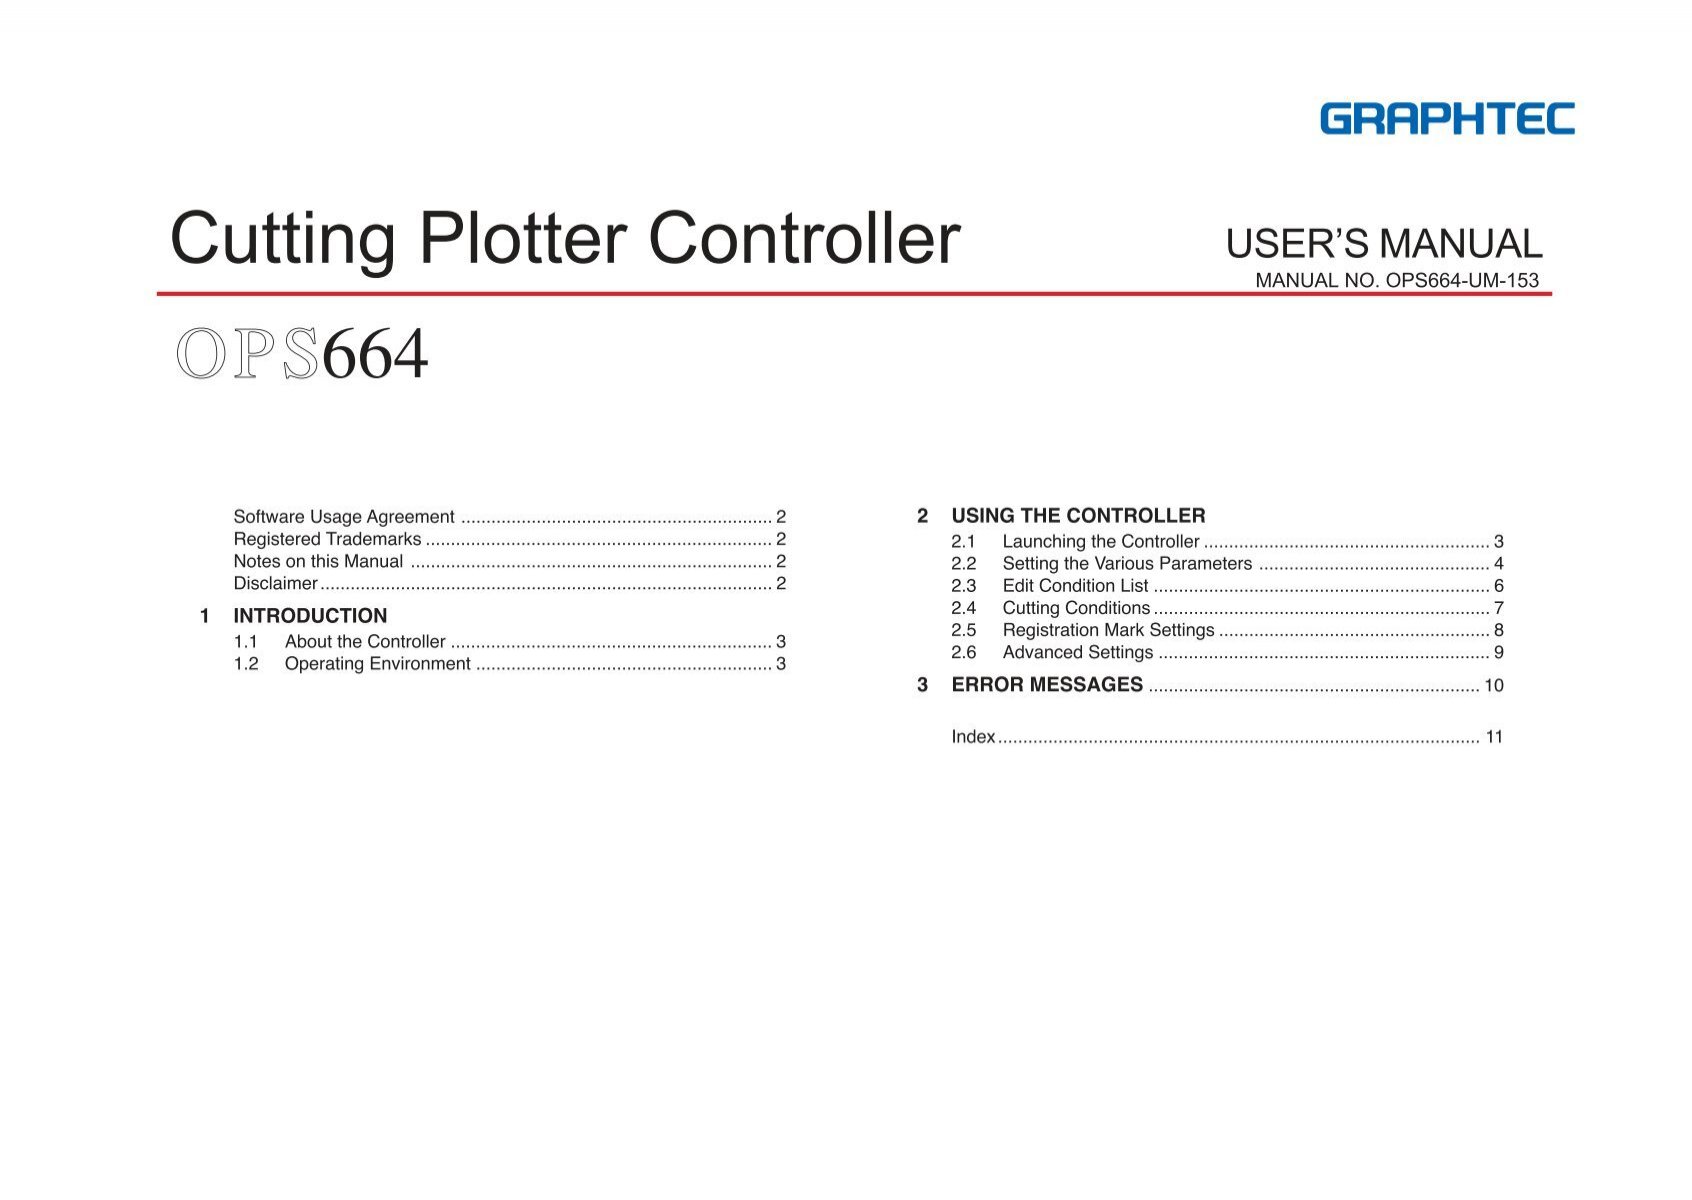 Keep getting Mark scan error! - GraphTec Cutting Plotter Support